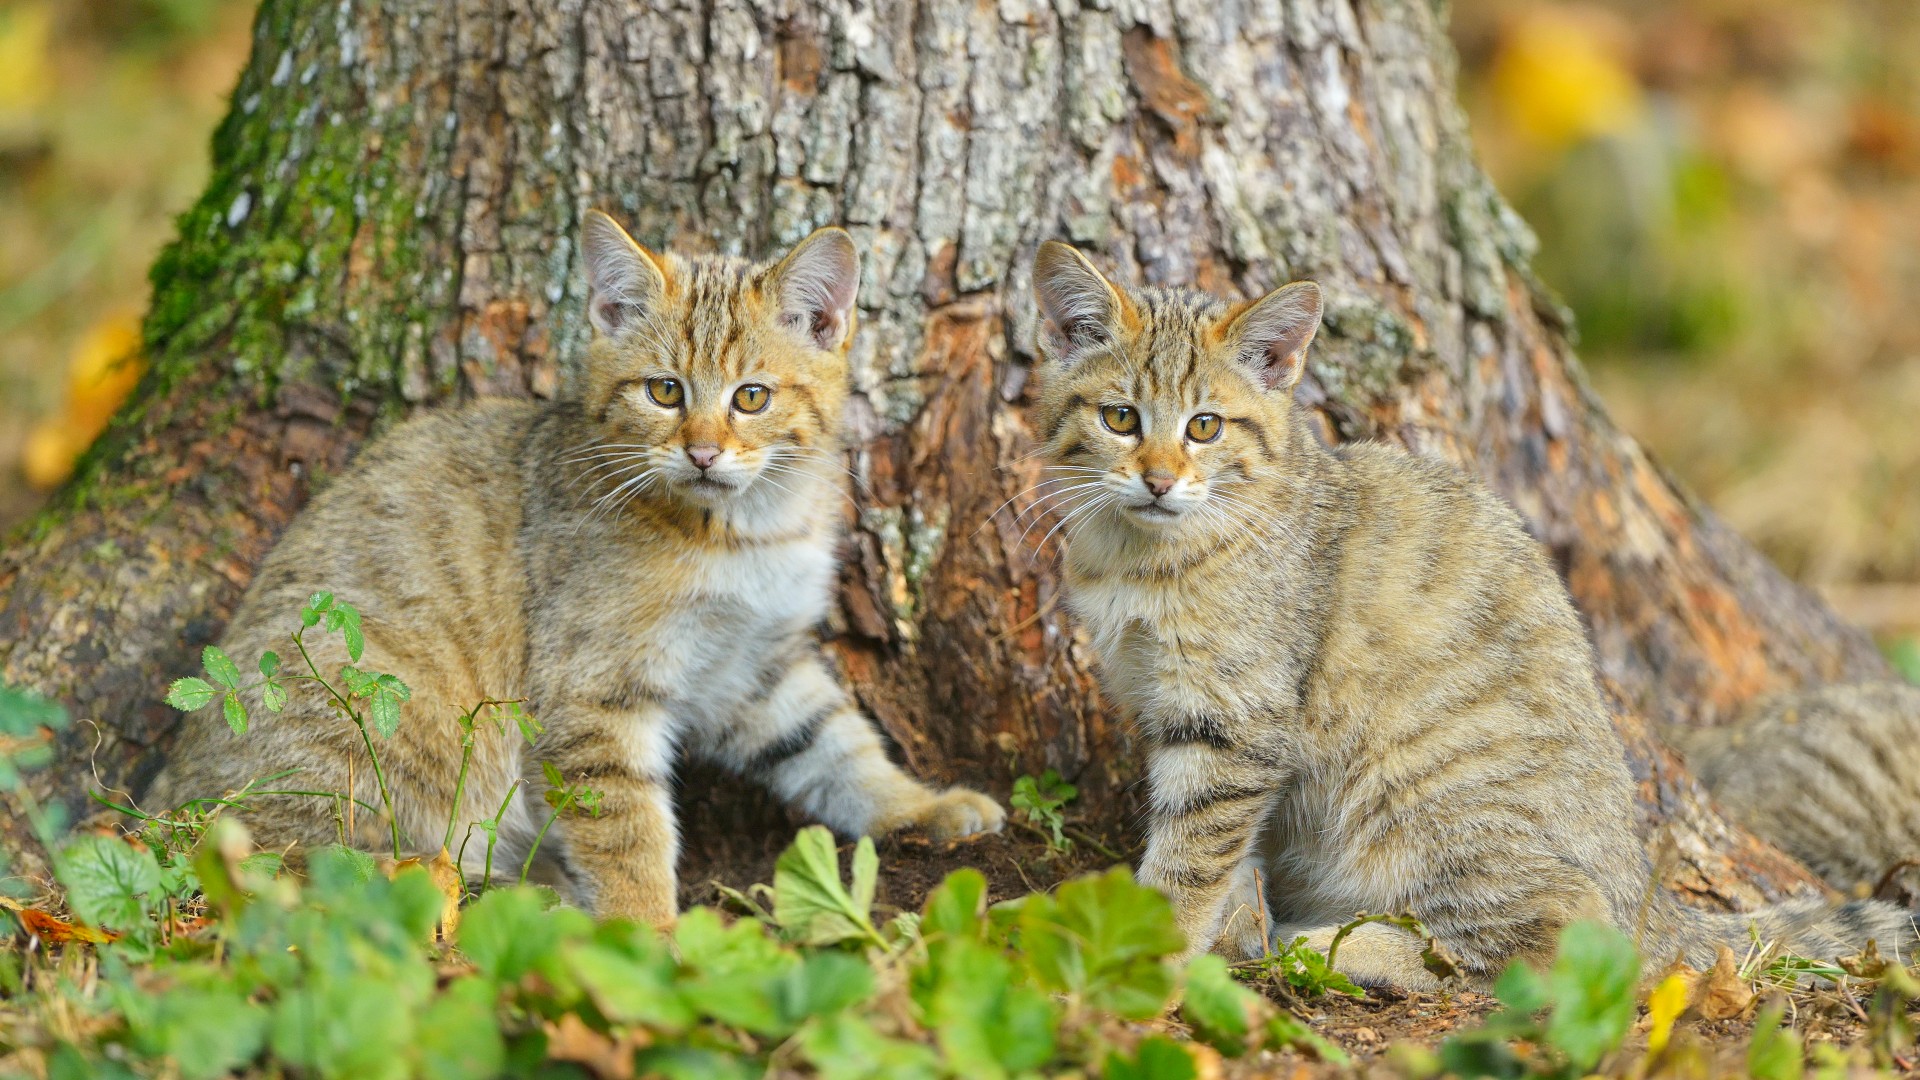 Two Wildcat (Felis silvestris) sitting in front of a tree.